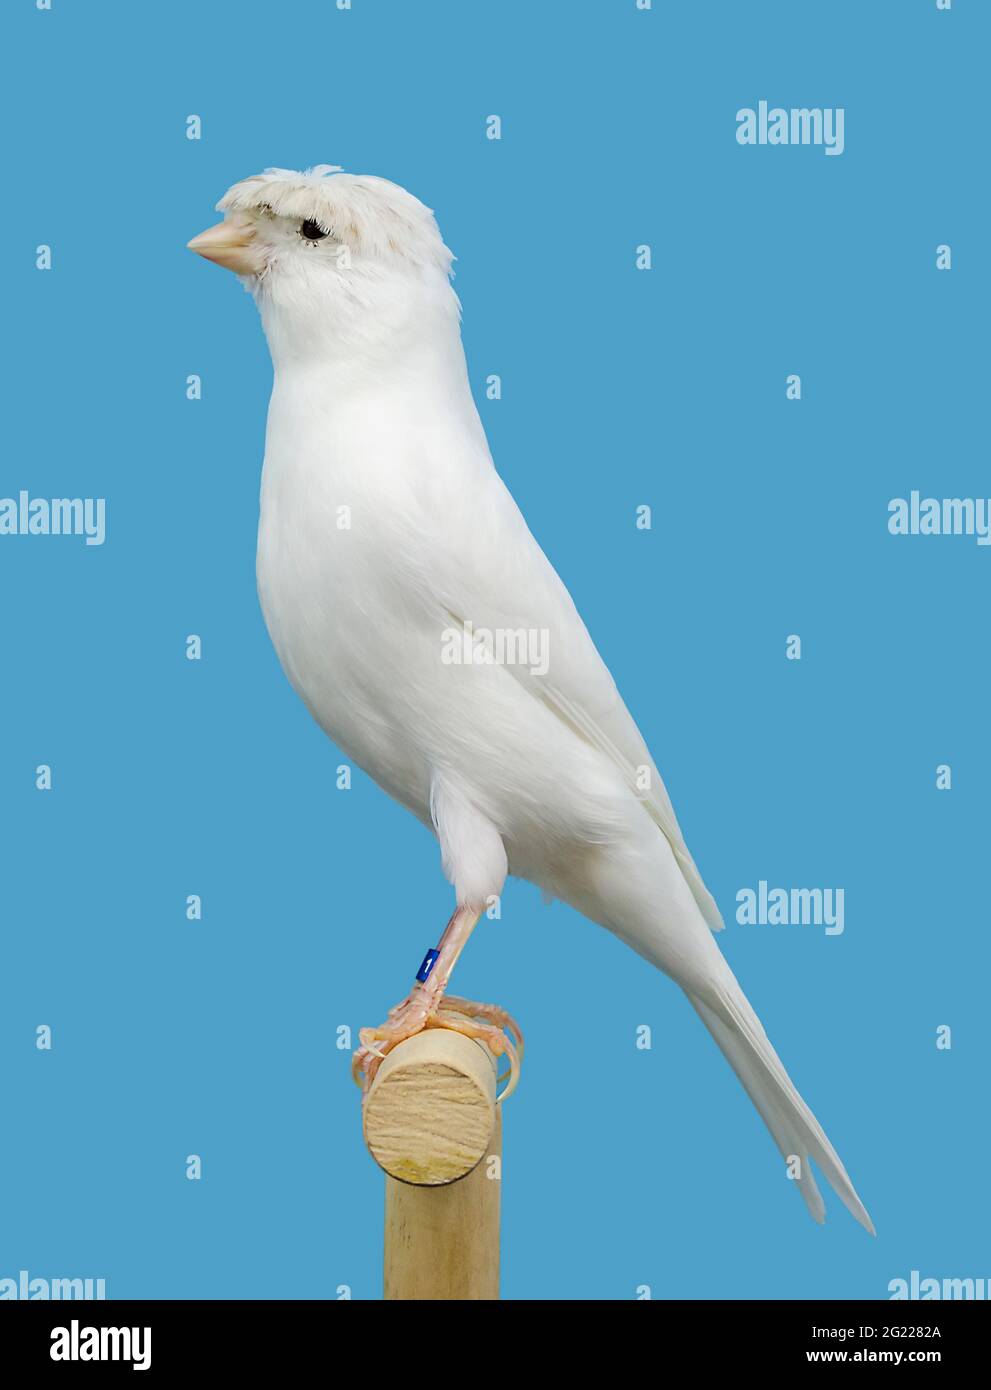 Economía caos Correctamente Pájaro canario nacional blanco encaramado en caja blanda Fotografía de  stock - Alamy